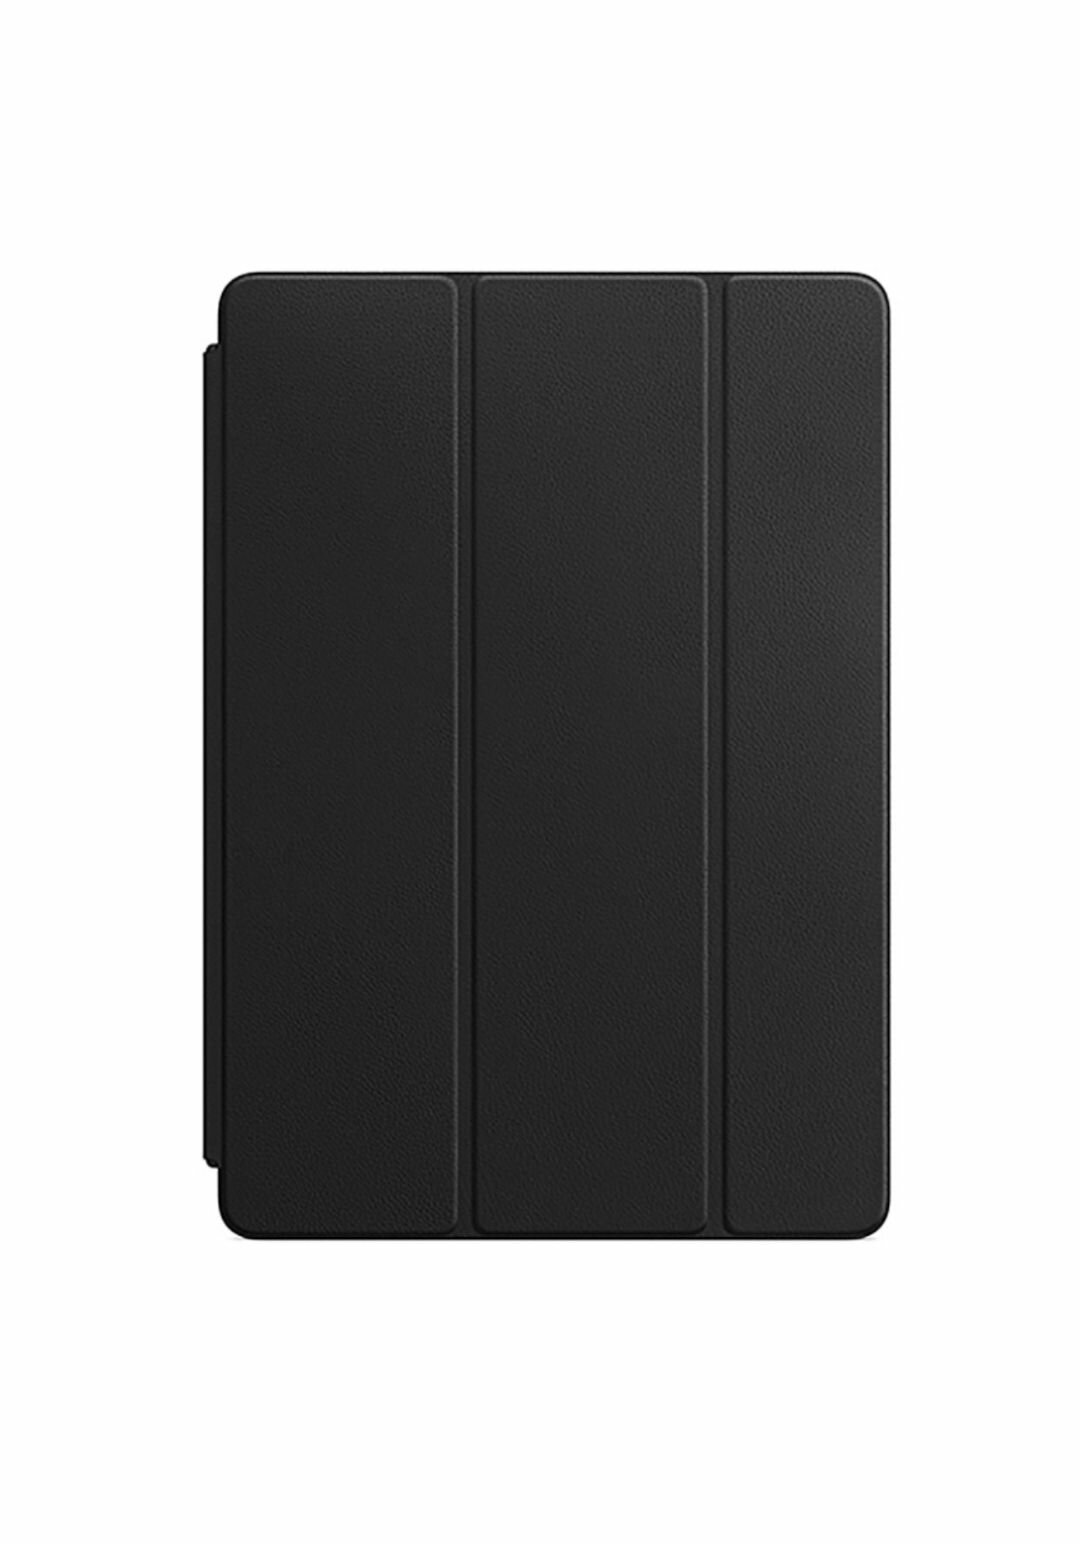 IPad Pro 2 2017 10.5 A1701 A1709 чехол книжка smart case для планшета эпл айпад про аир чёрный смарт кейс